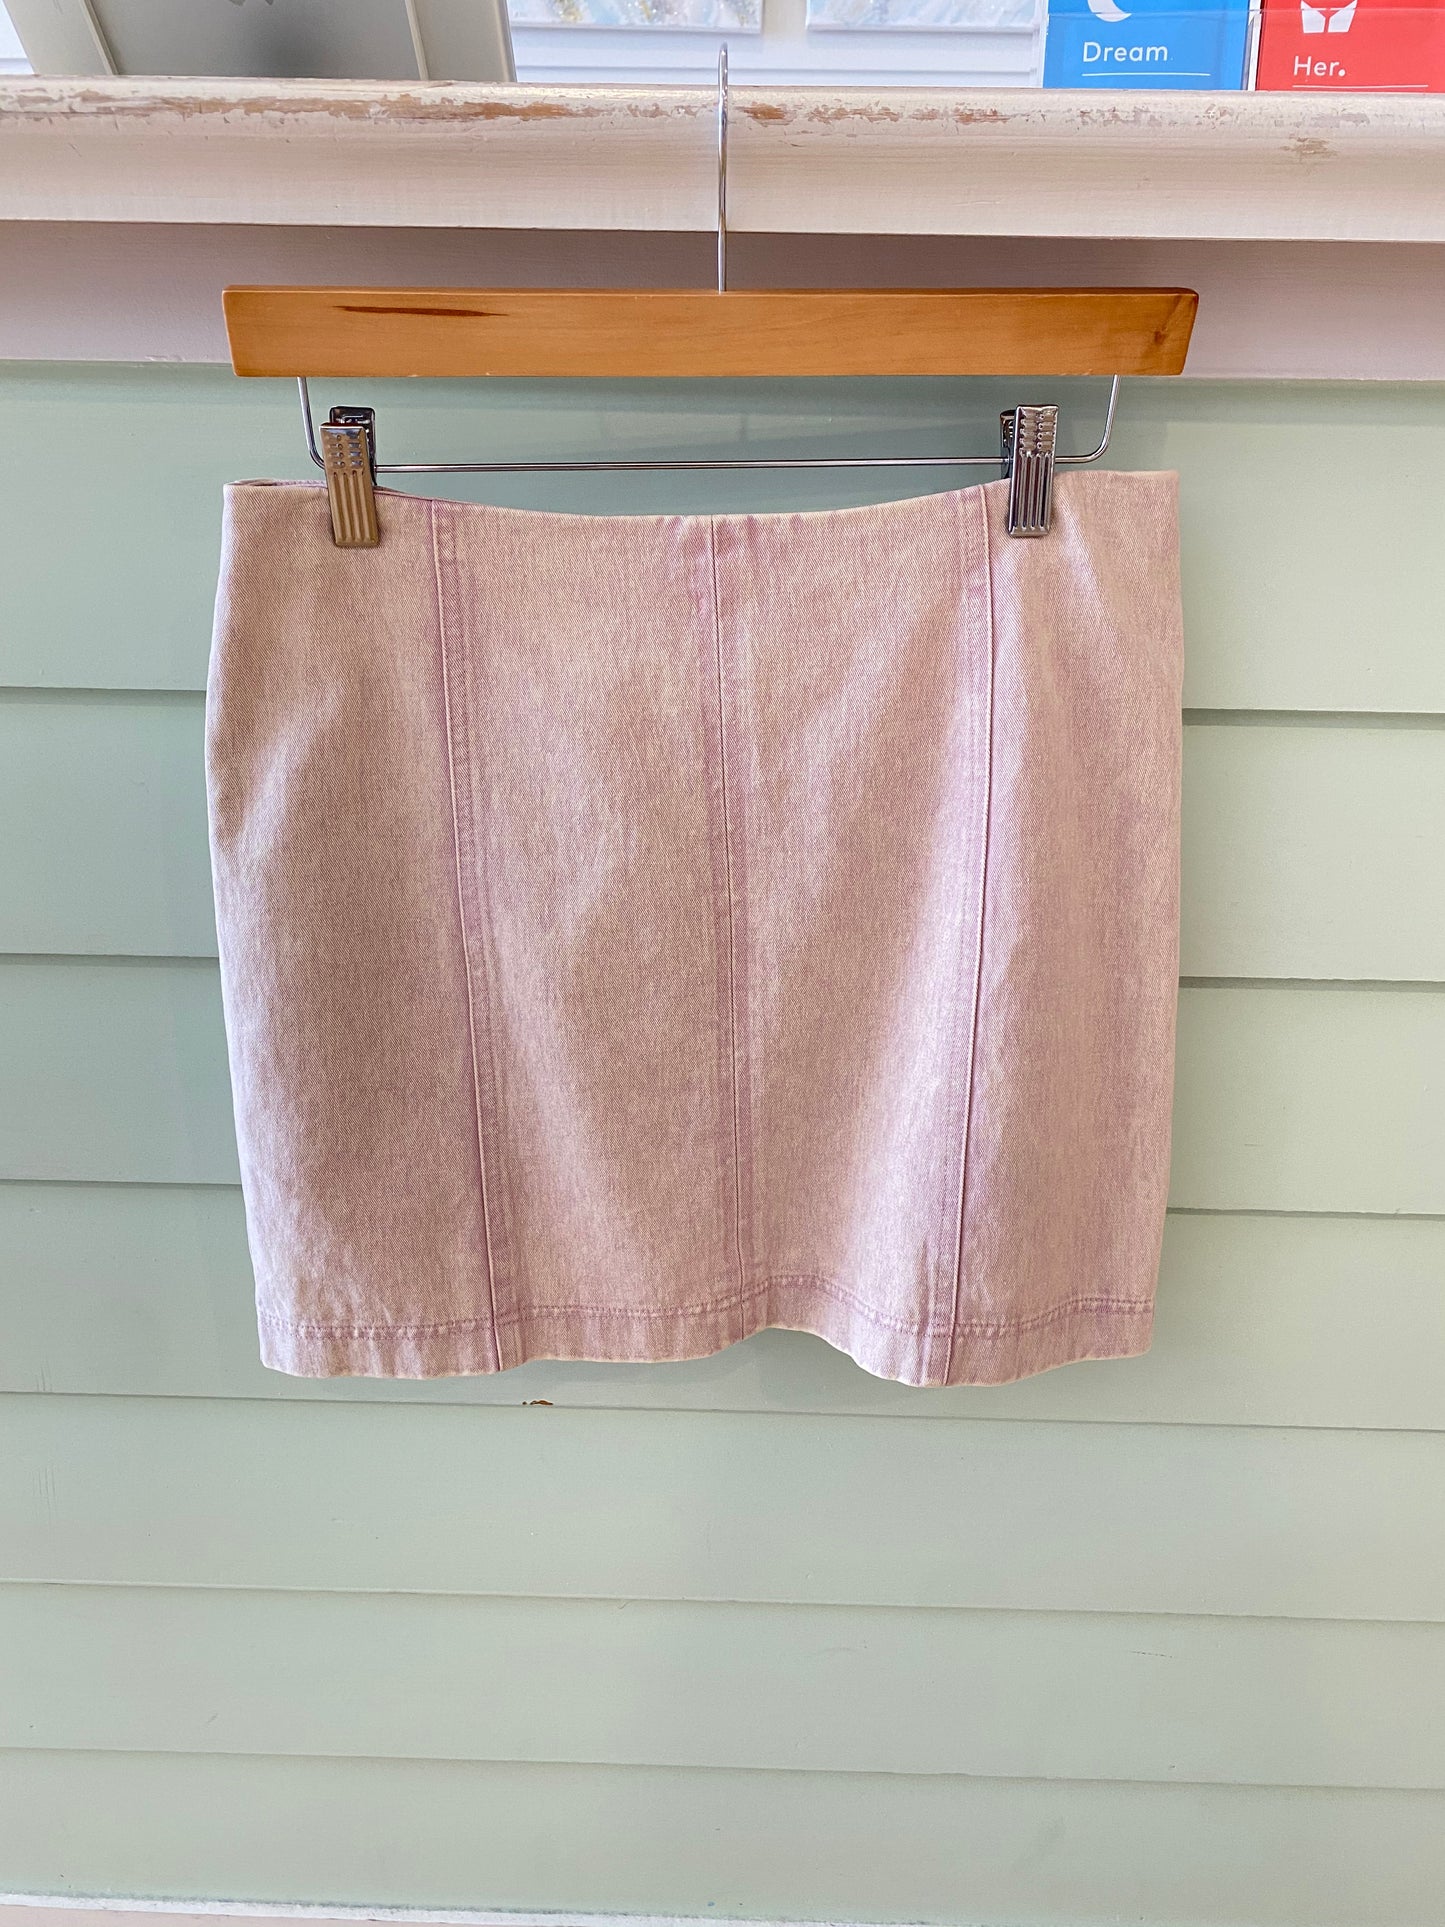 Washed Denim Mini Skirt